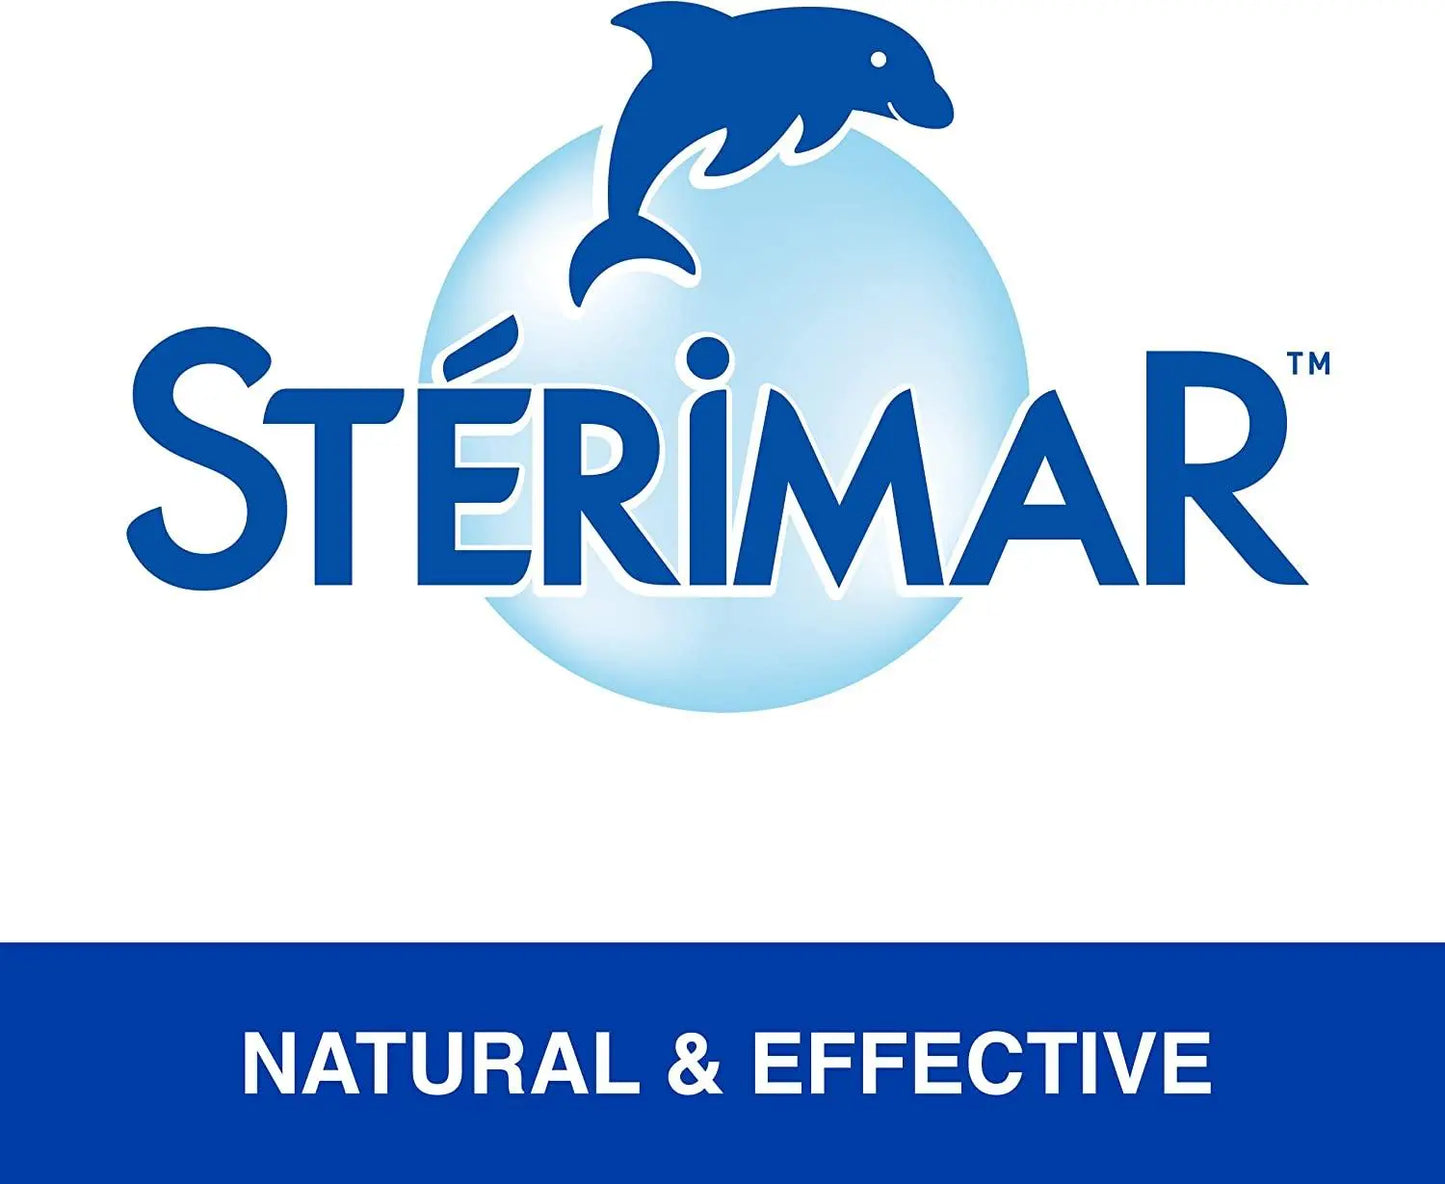 Stérimar Stop & Protect Cold & Sinusitis relief